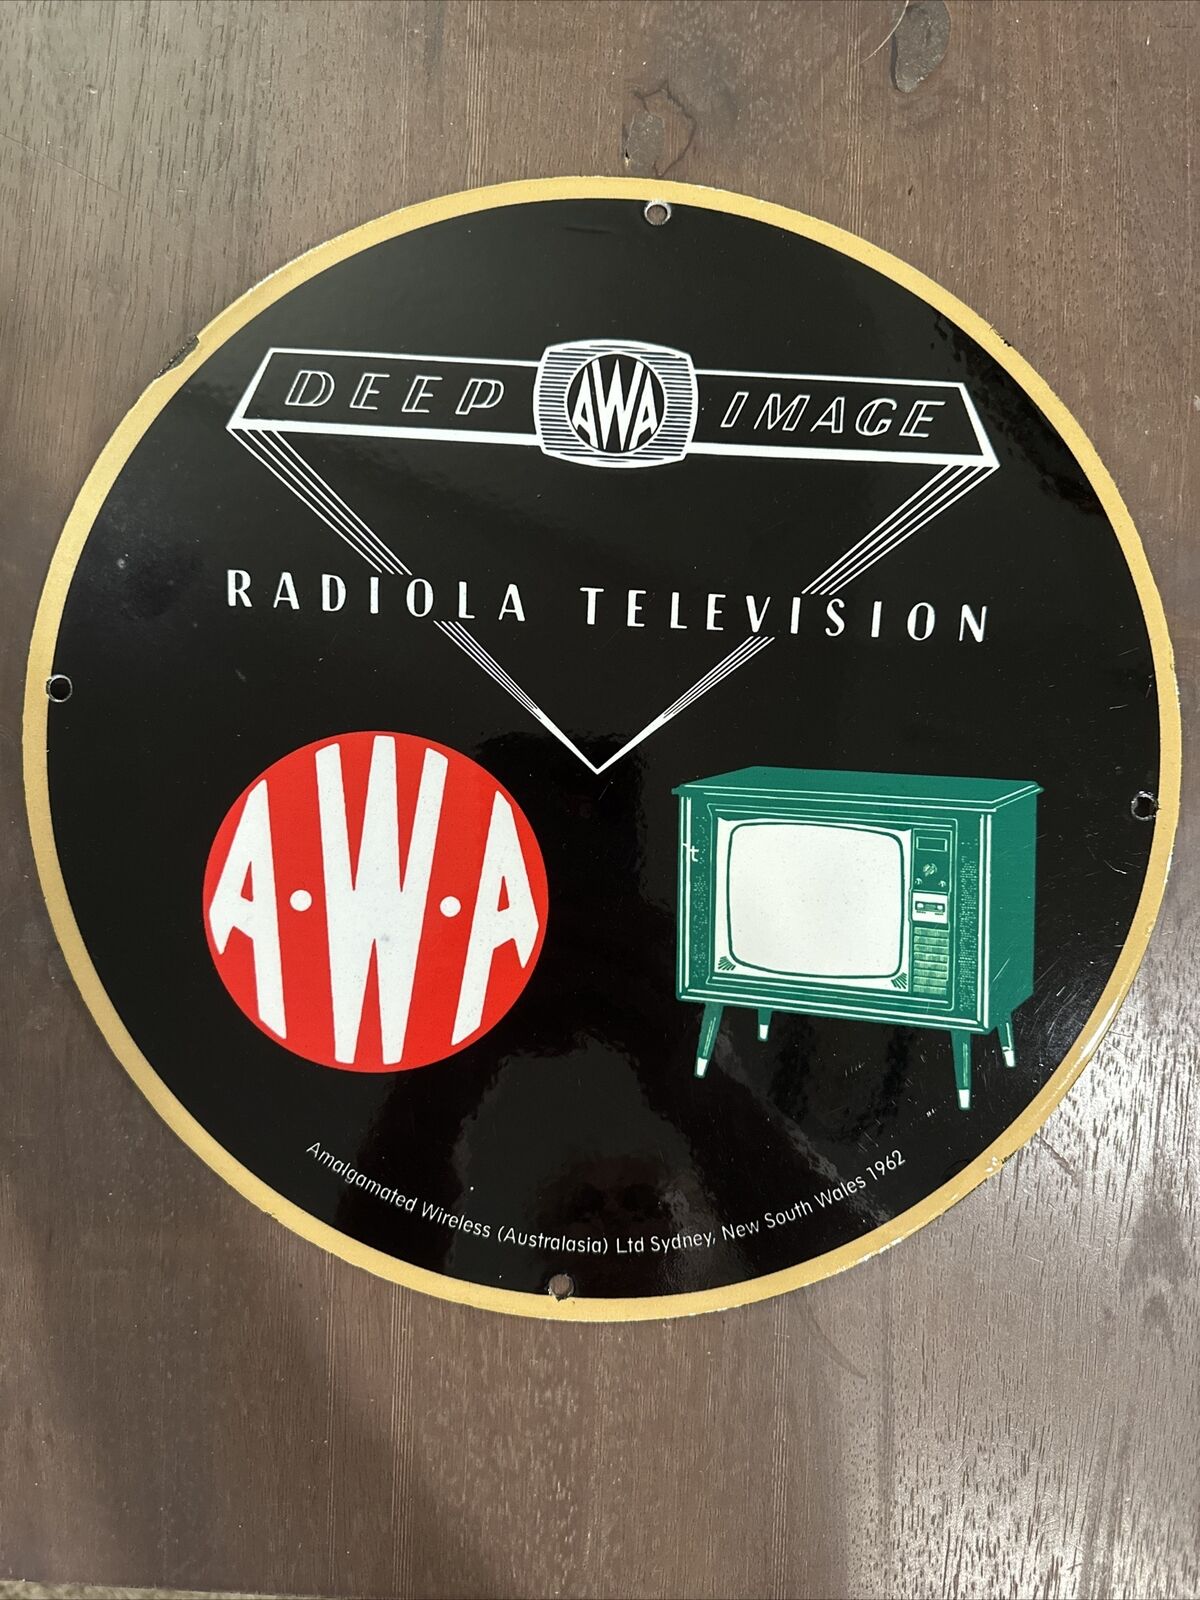 Vintage Porcelain Deep AWA Image Radiola Television Enamel Metal Advrtsng Sign